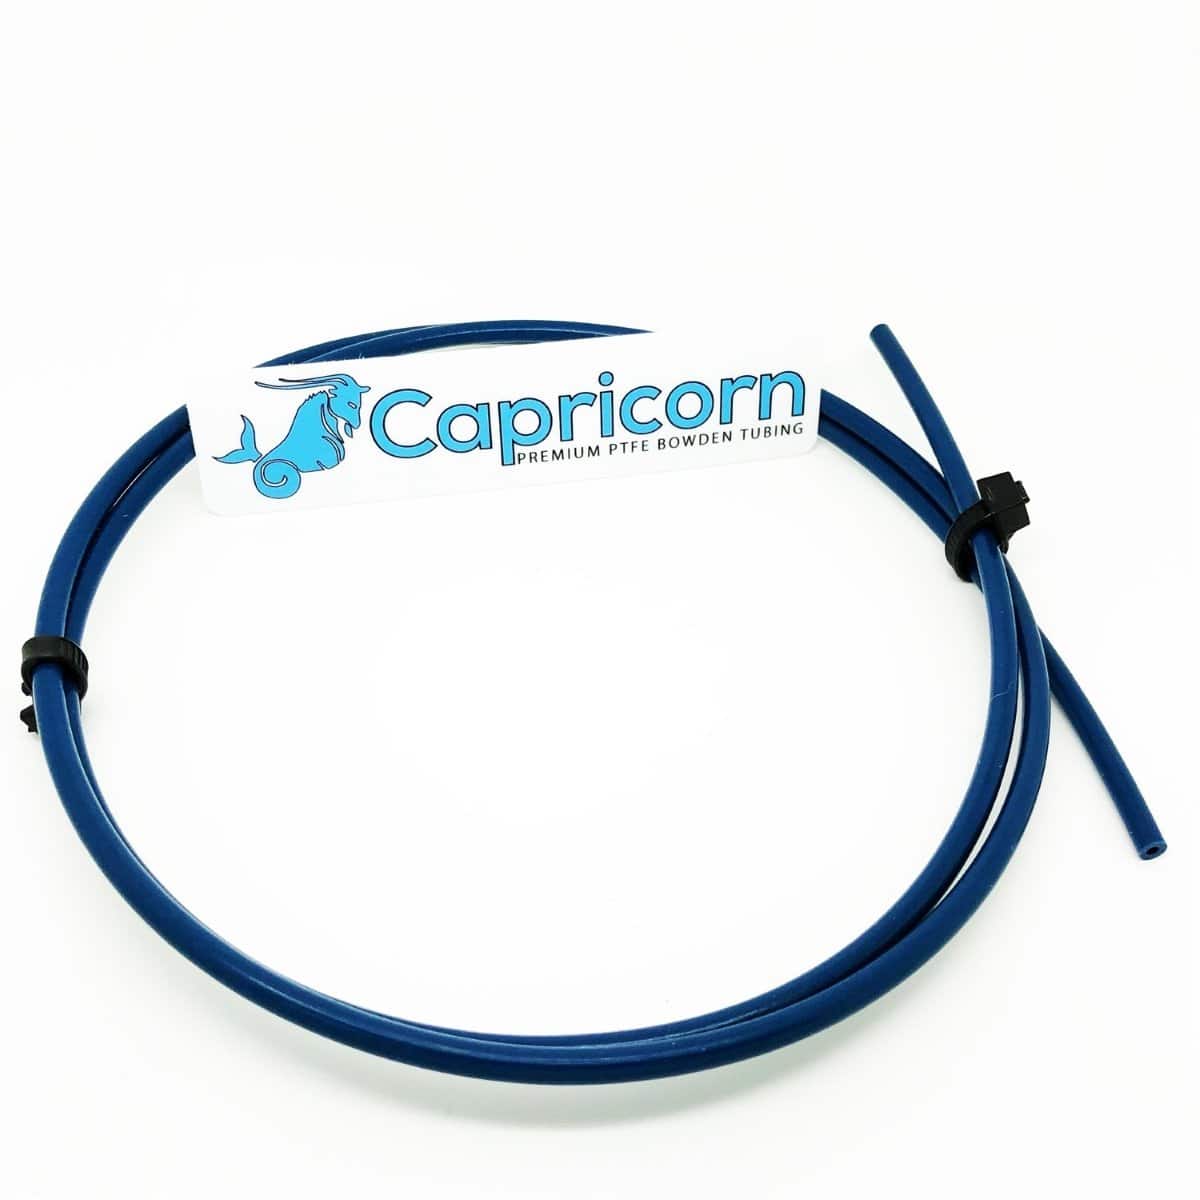 Køb Capricorn XS Series PTFE Bowden Tubing for 1.75mm Filament - Pris 159.00 kr.